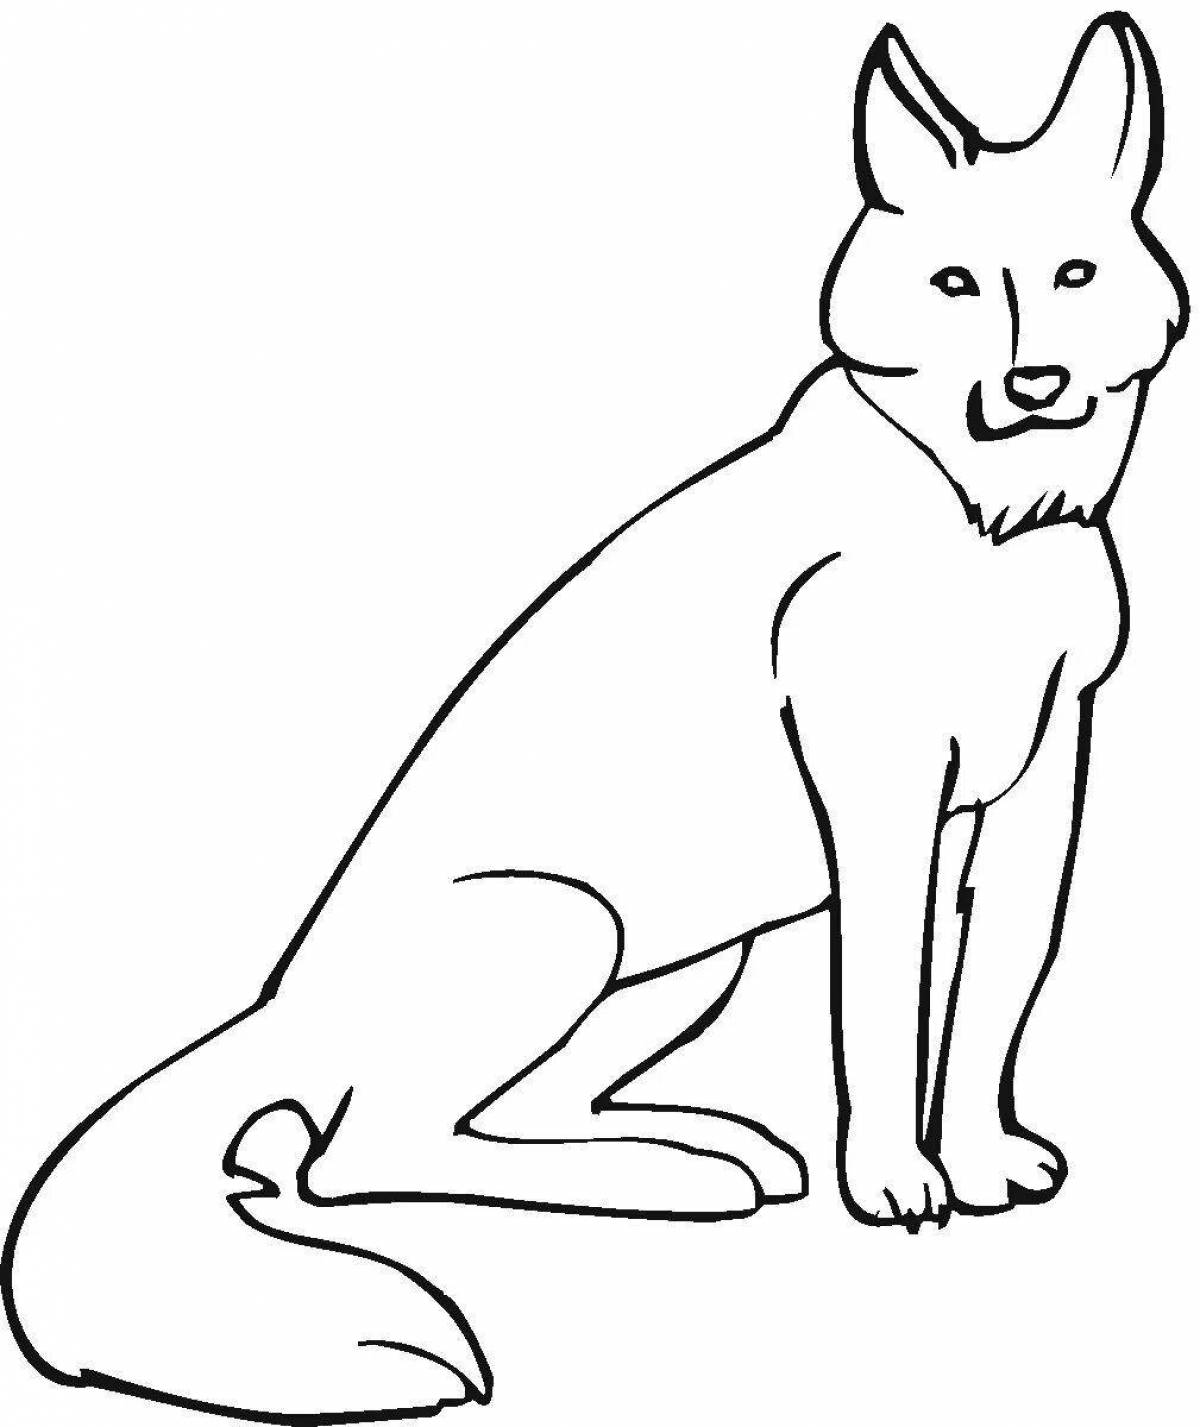 Coloring page cute dingo dog